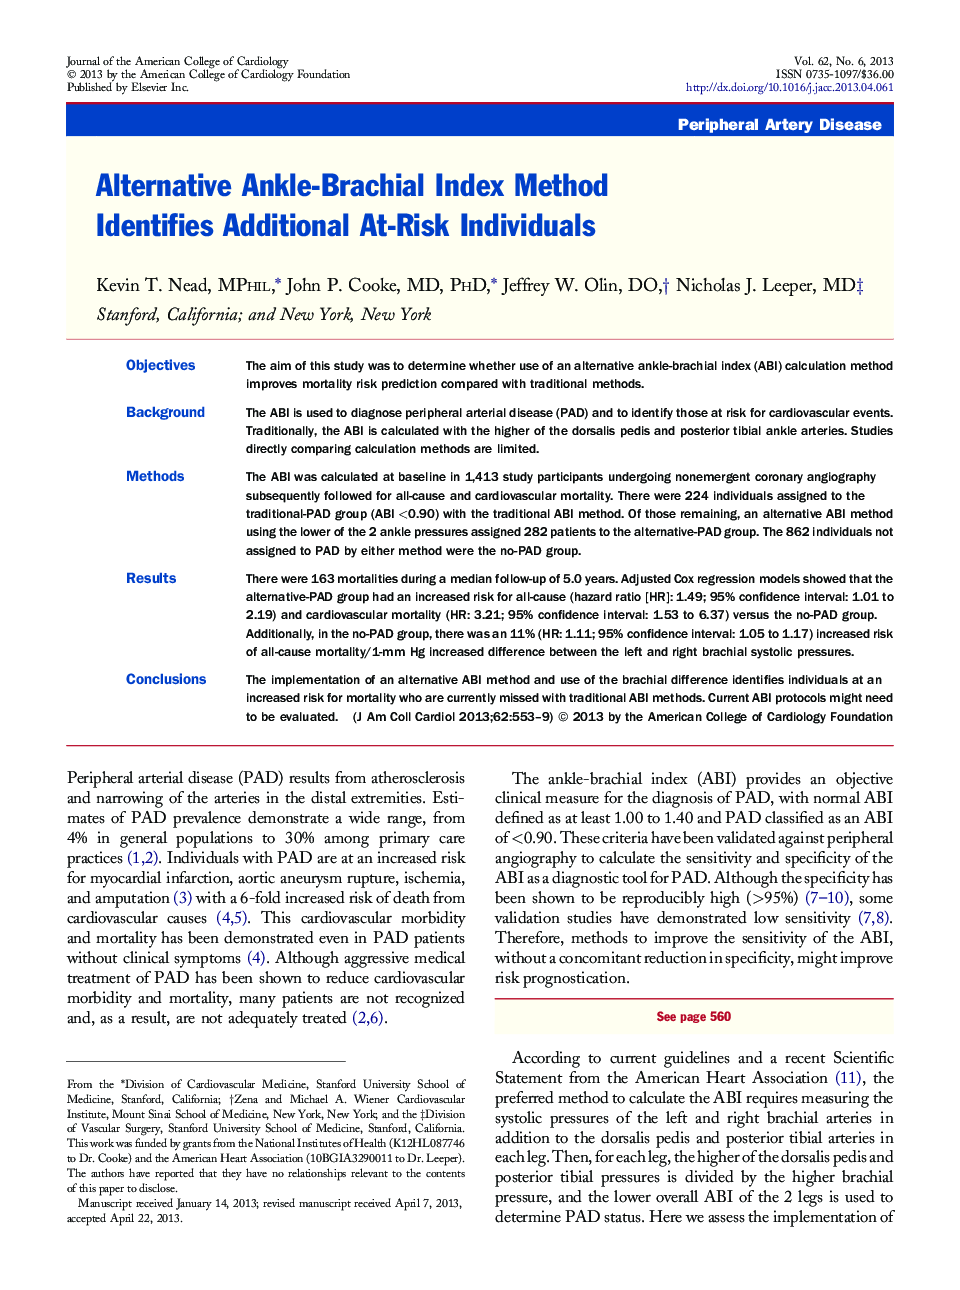 Alternative Ankle-Brachial Index Method Identifies Additional At-Risk Individuals 